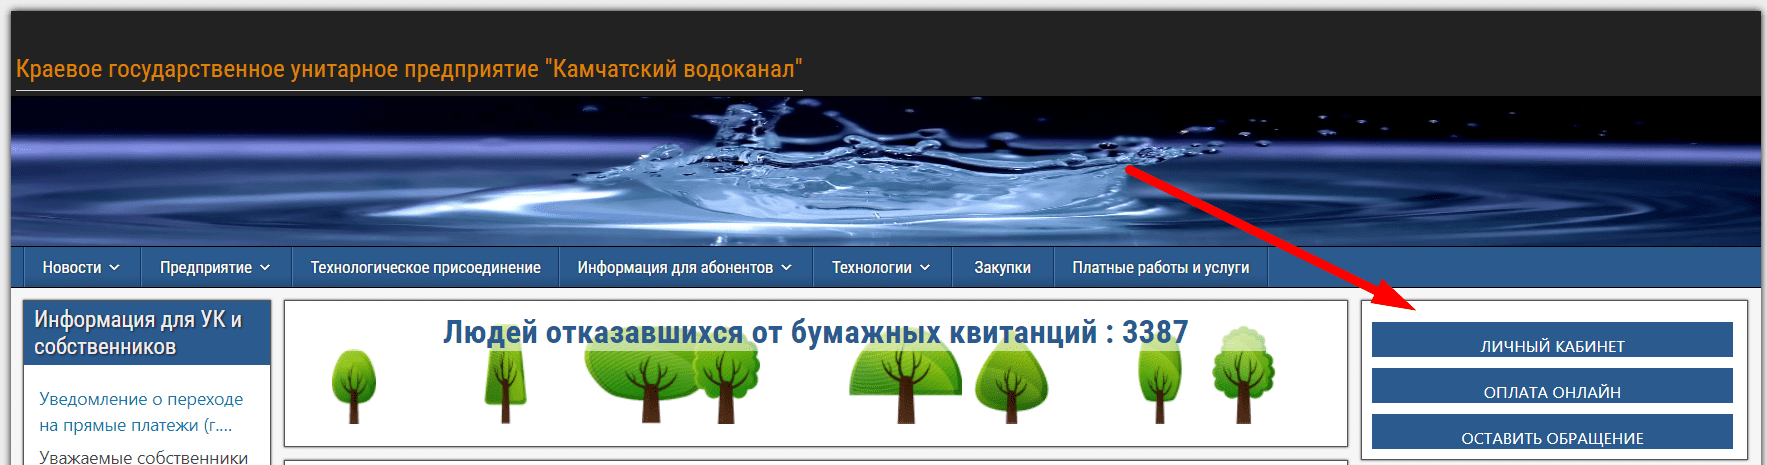 Камчатский водоканал (pkvoda.ru)